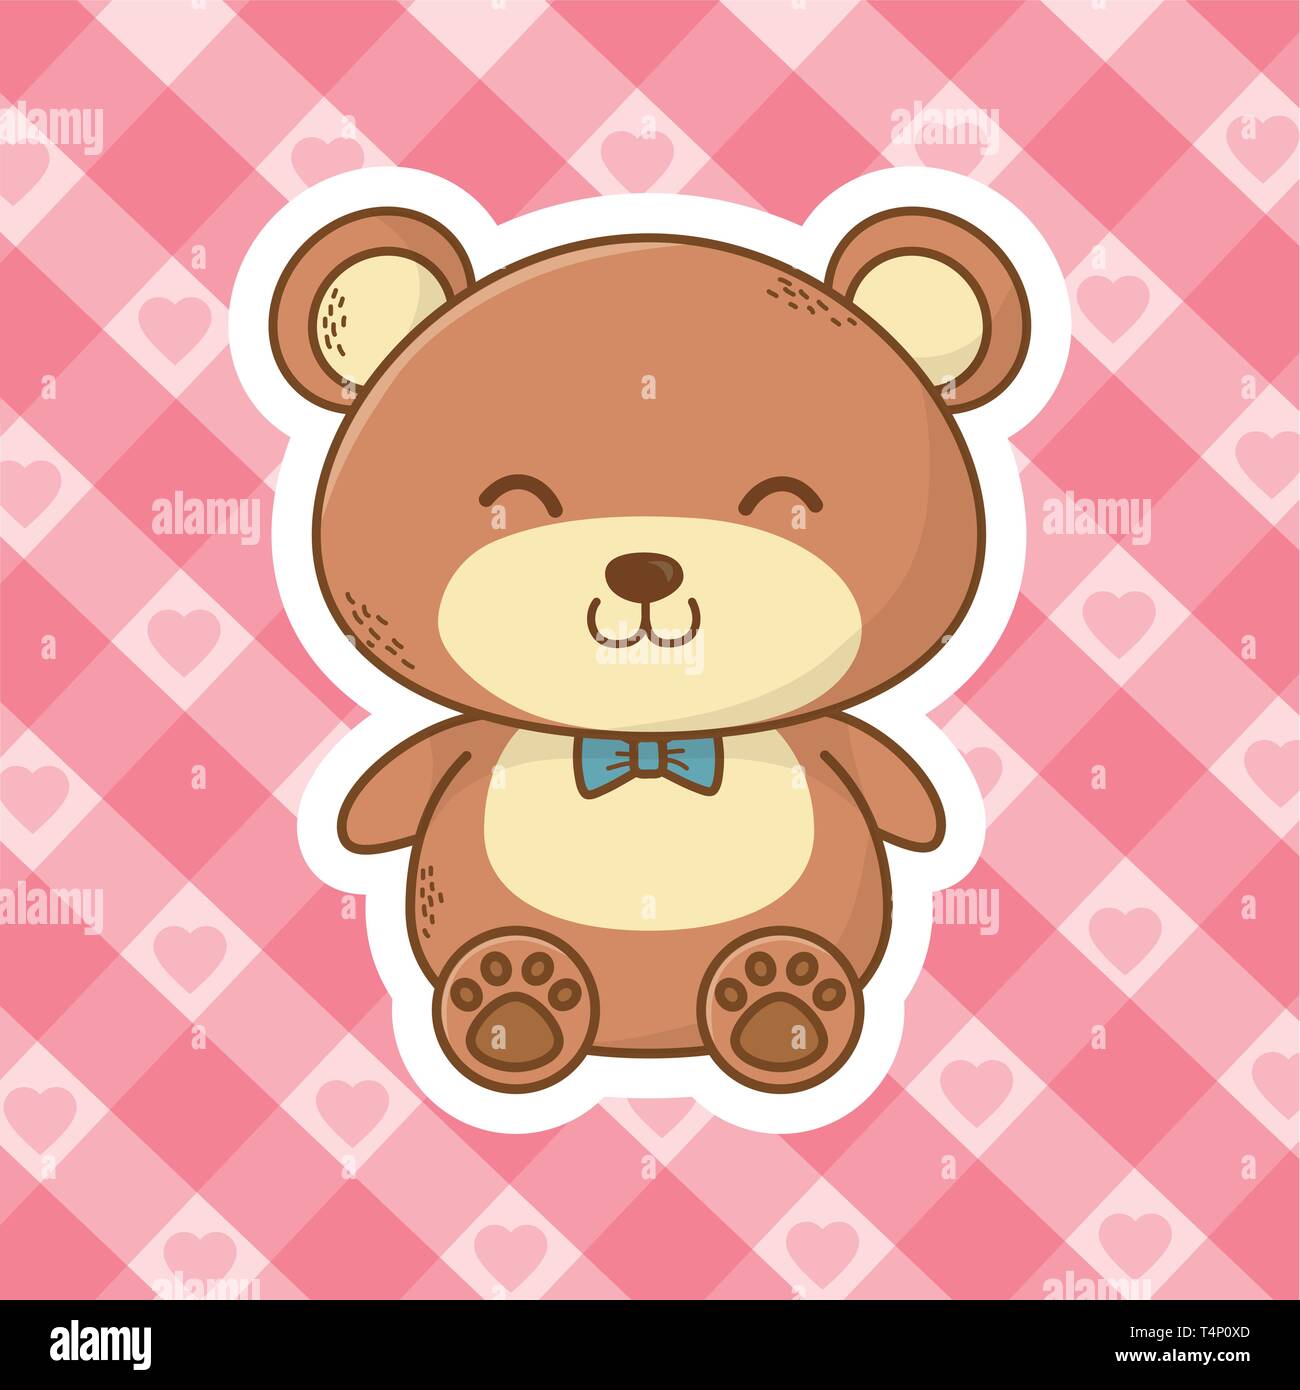 cute teddy bear cartoon vector illustration graphic design Stock ...